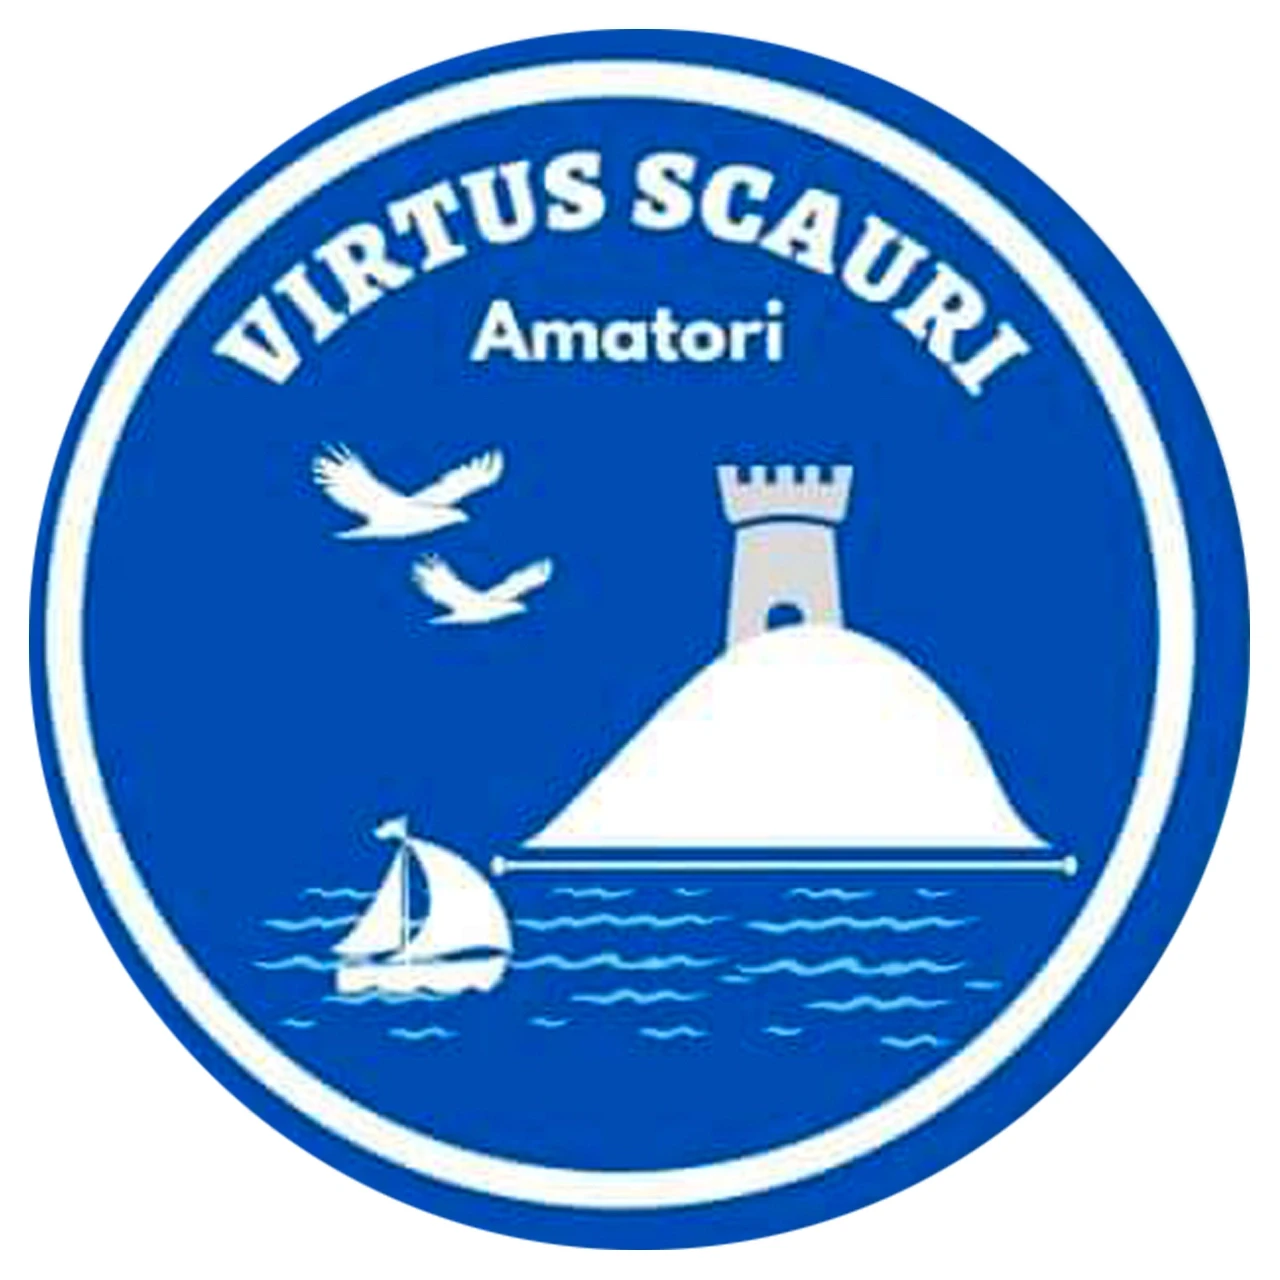 Virtus Scauri Amatori